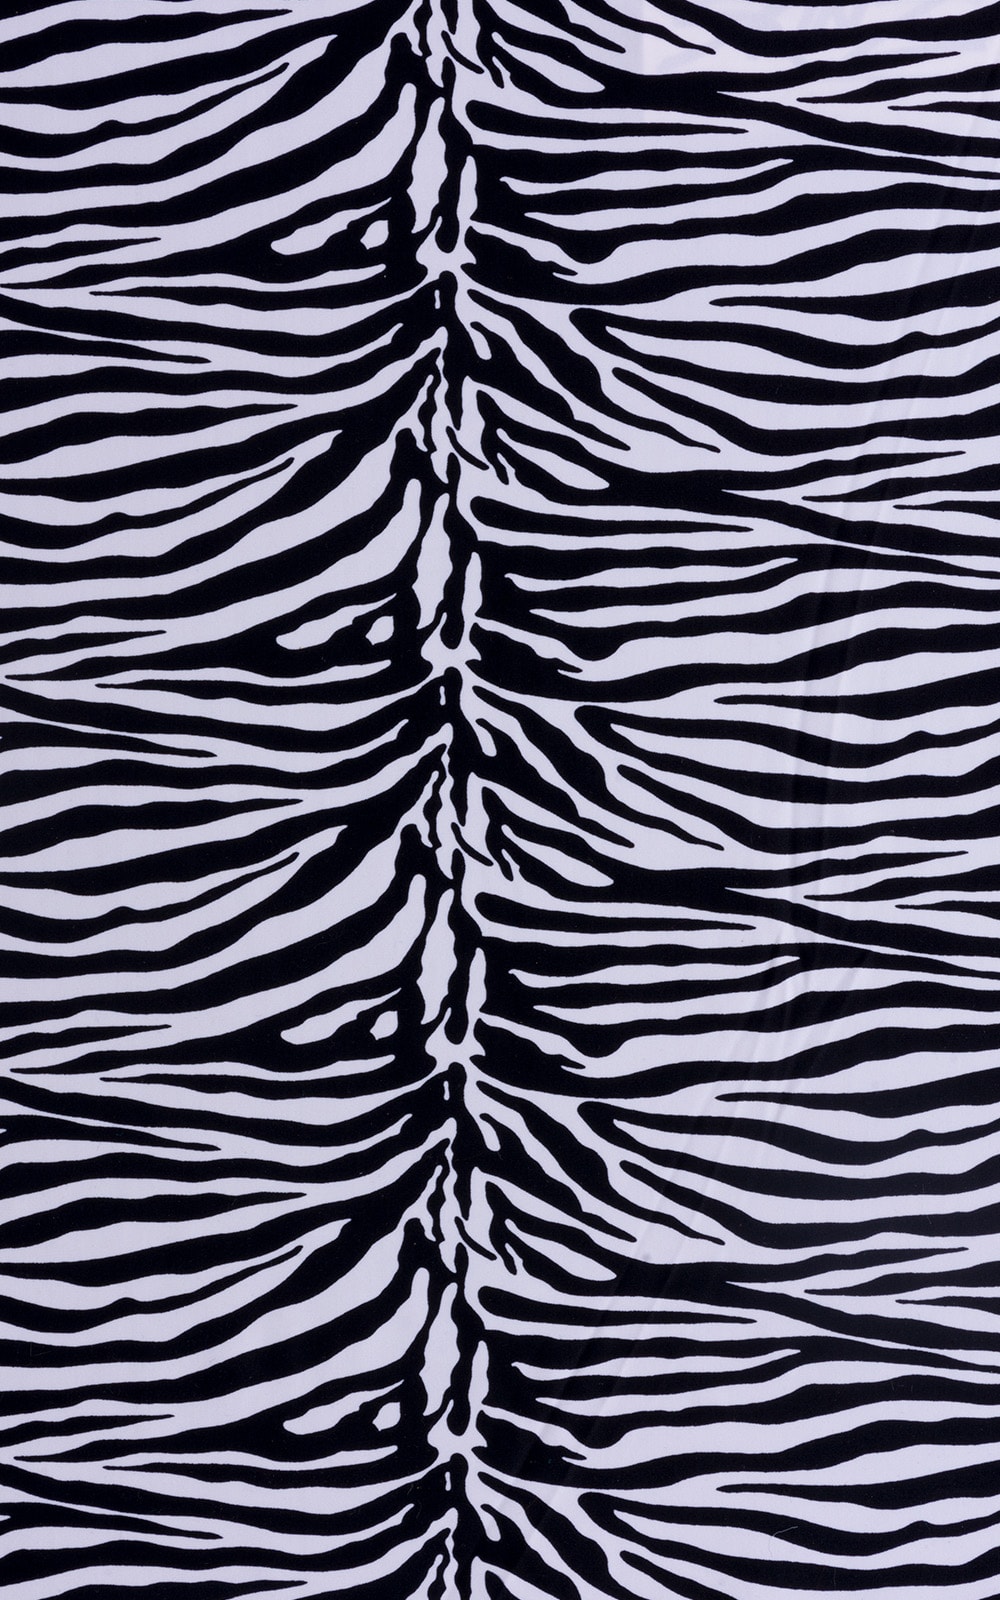 Sunseeker2 Tanning Swimsuit in Mini Zebra Fabric